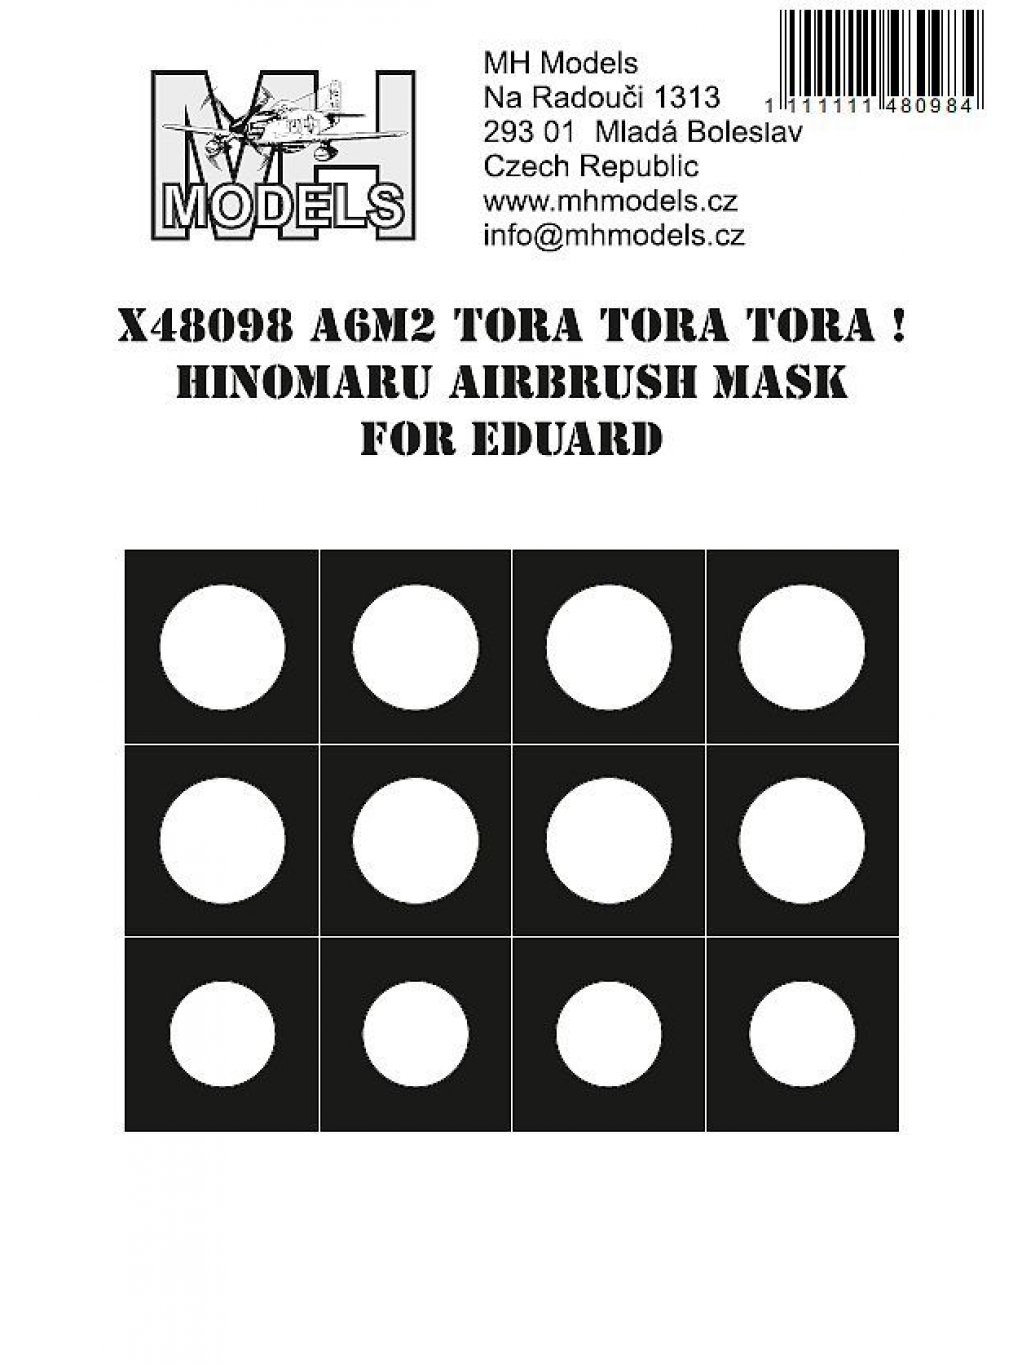 A6M2 Tora Tora Tora! Hinomaru airbrush mask for Eduard